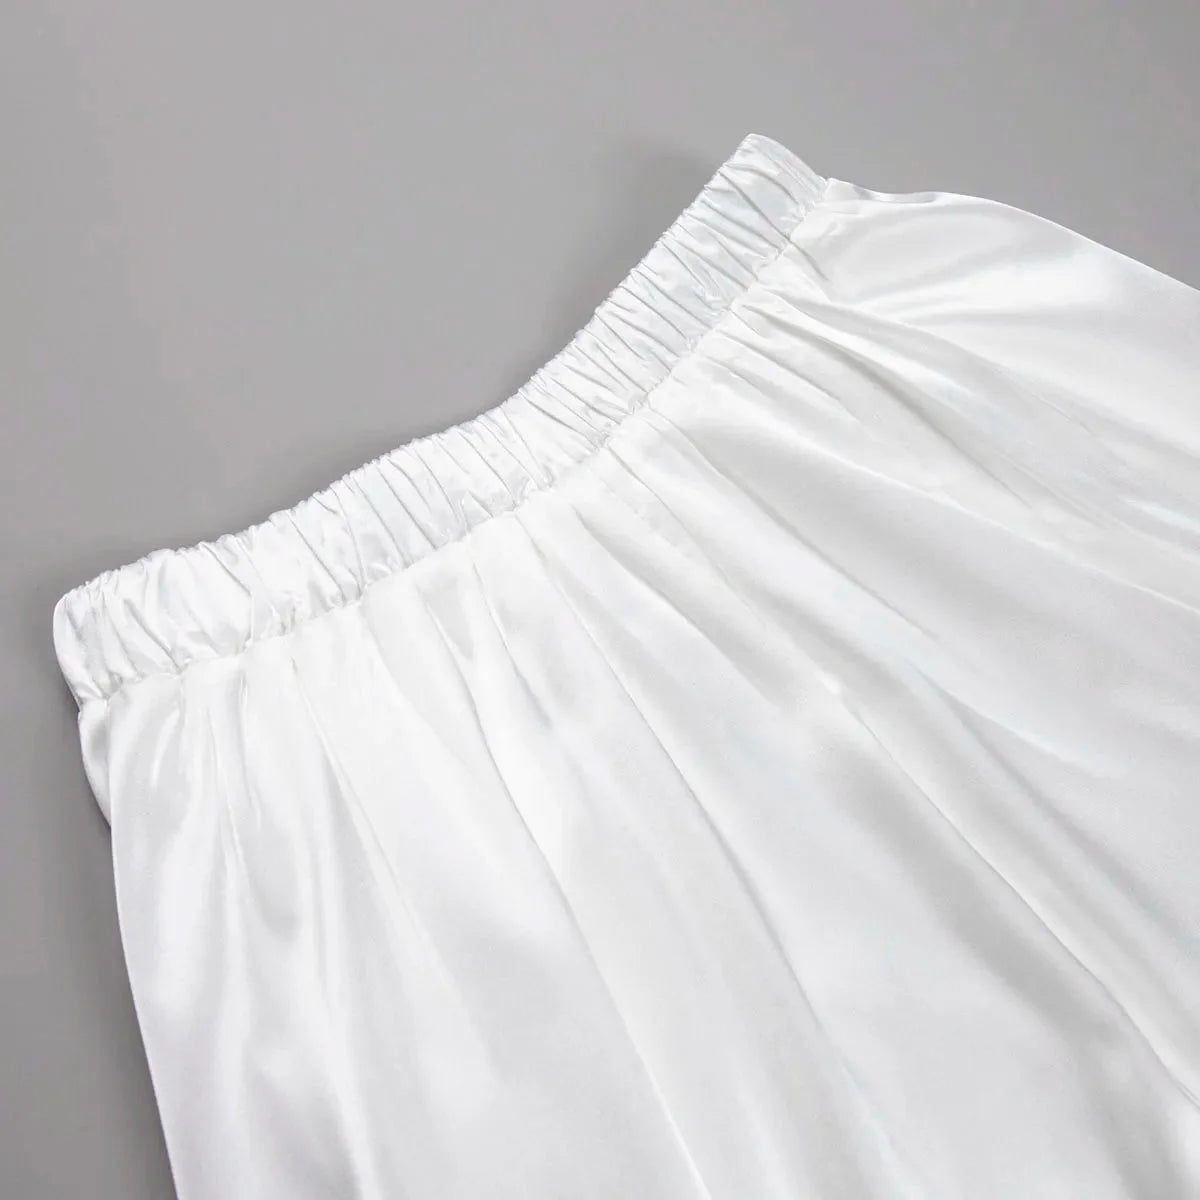 Elegant Satin Flare Maxi Skirts